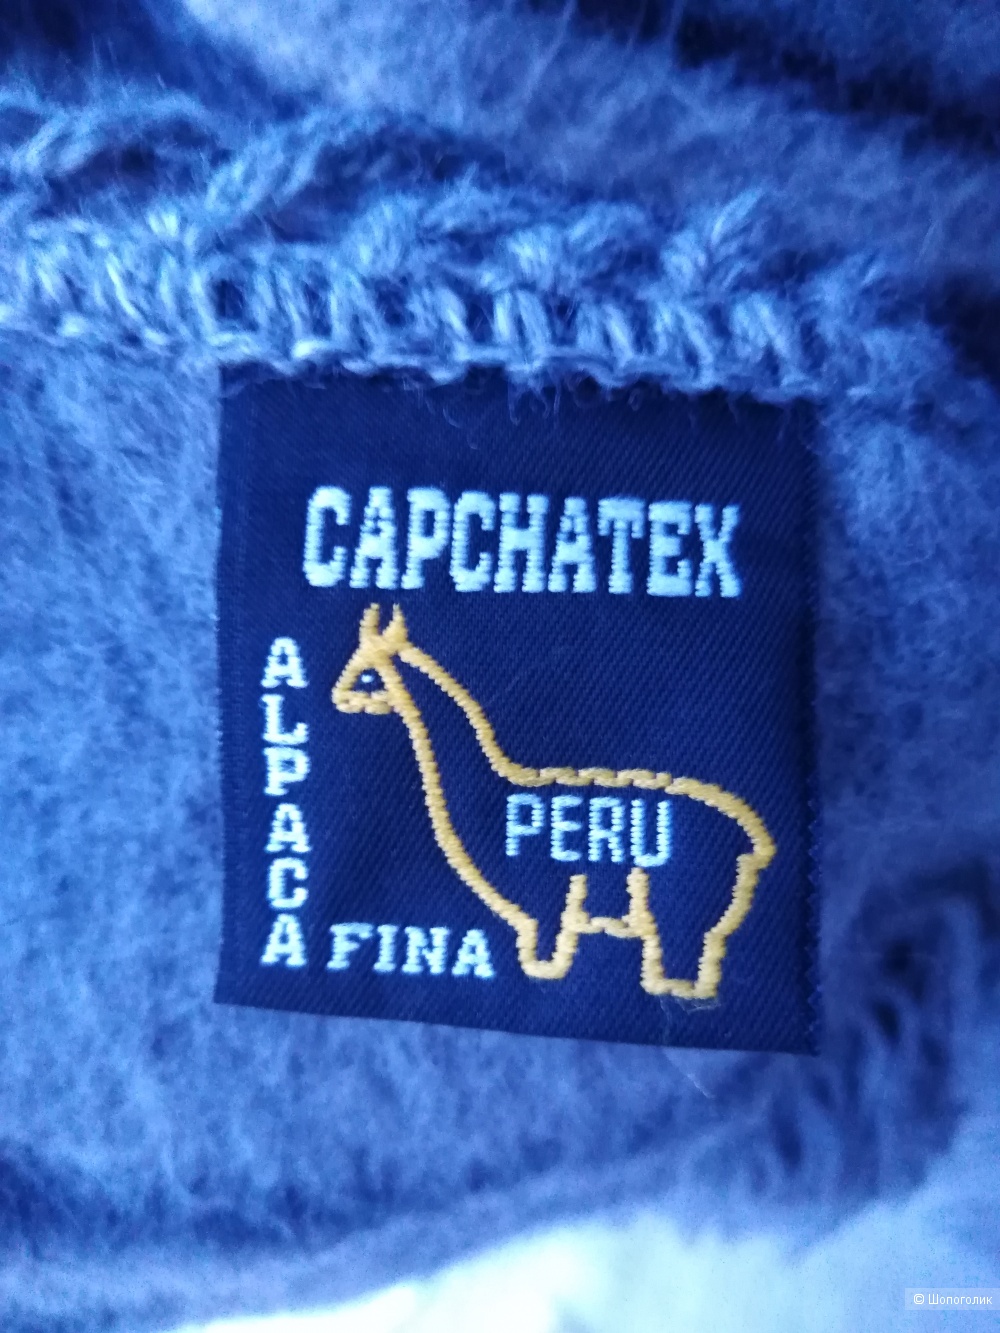 Пончо альпака, бренд Capchatex